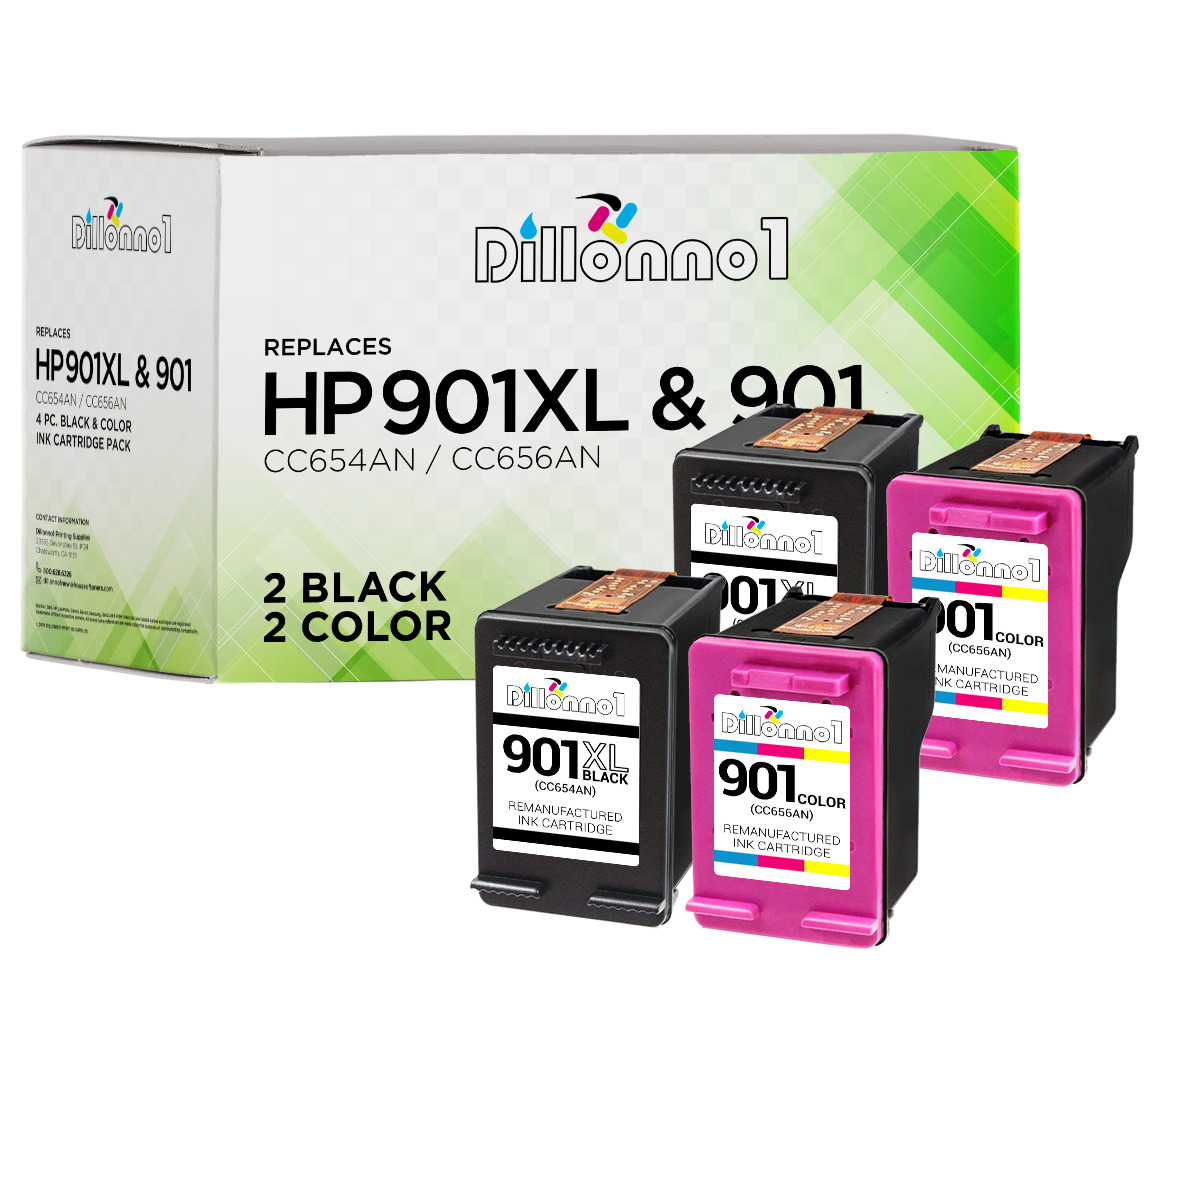 4PK 901 Black/Color CC653A CC656A Ink For HP Officejet J4524 J4540 J4550 J4580